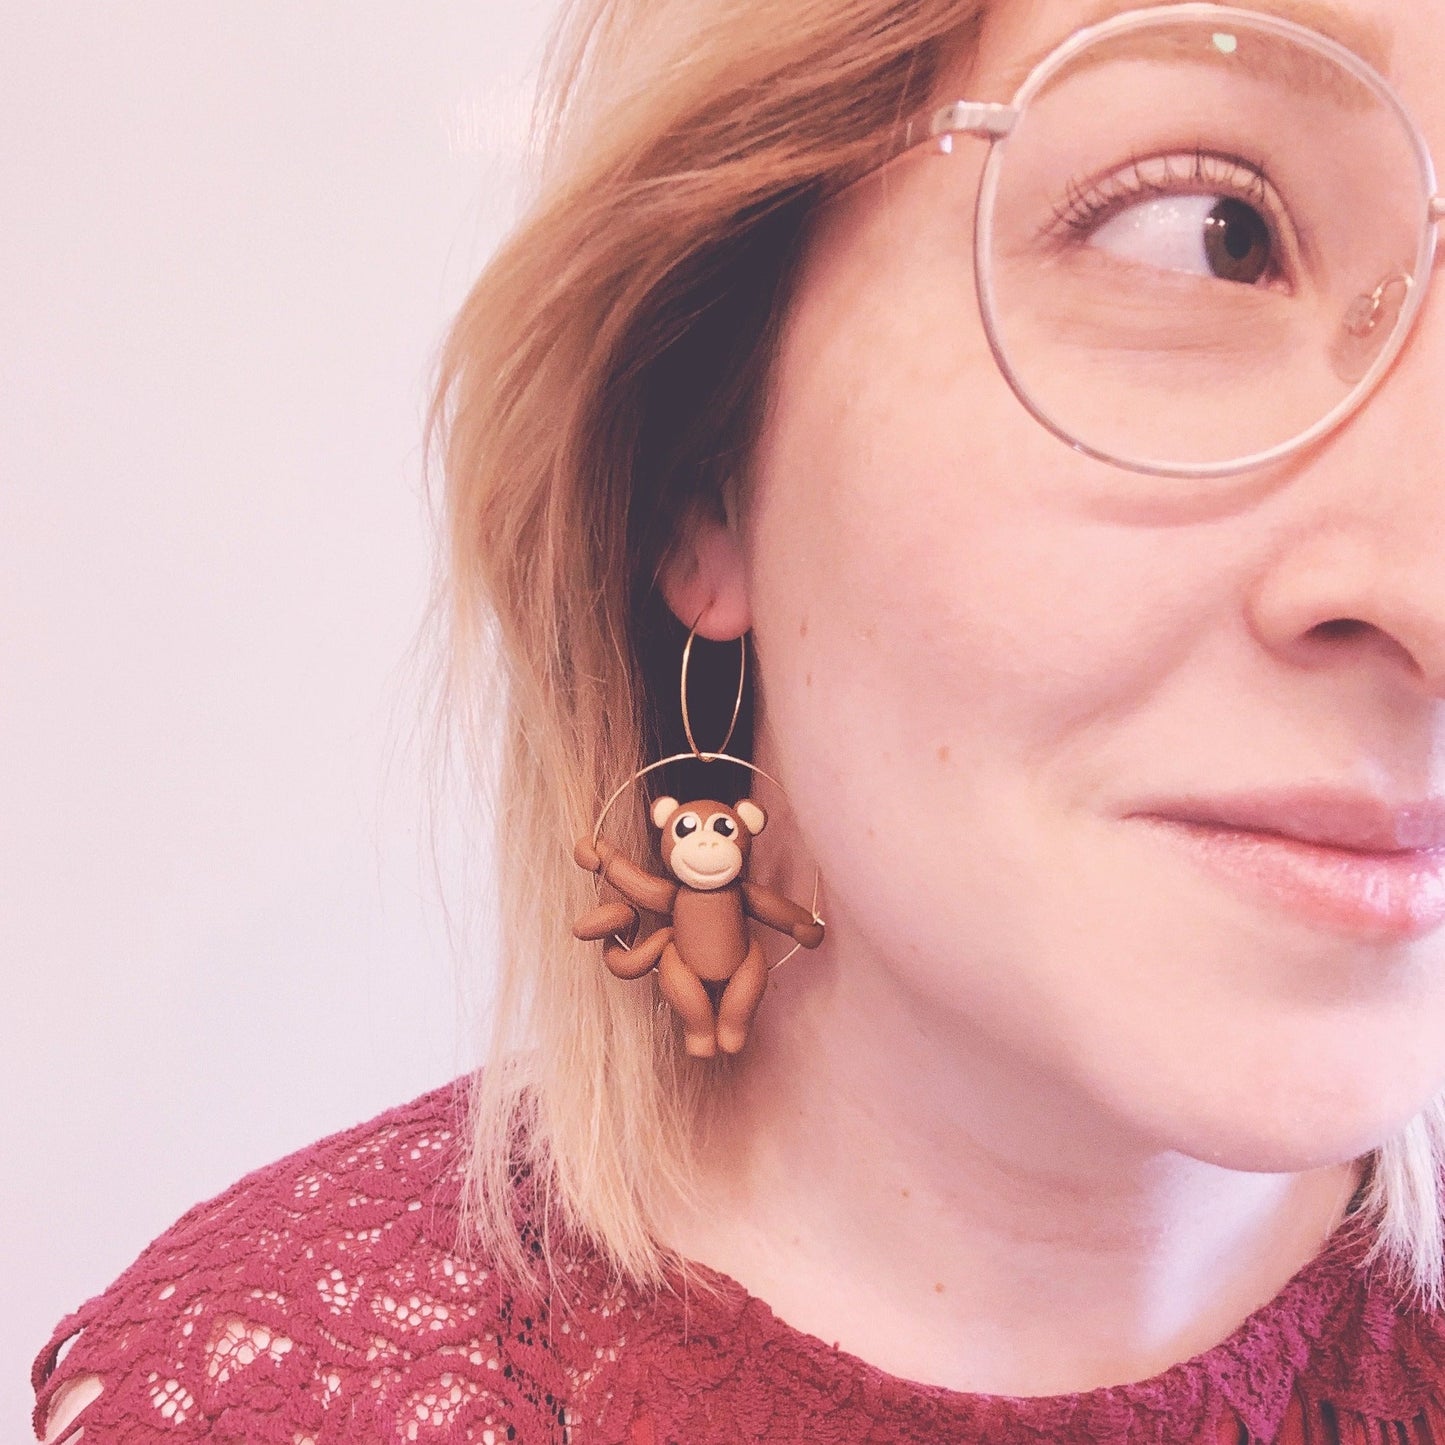 cheeky monkey earring selfie showing the polymer clay monkey hanging from hoop earring